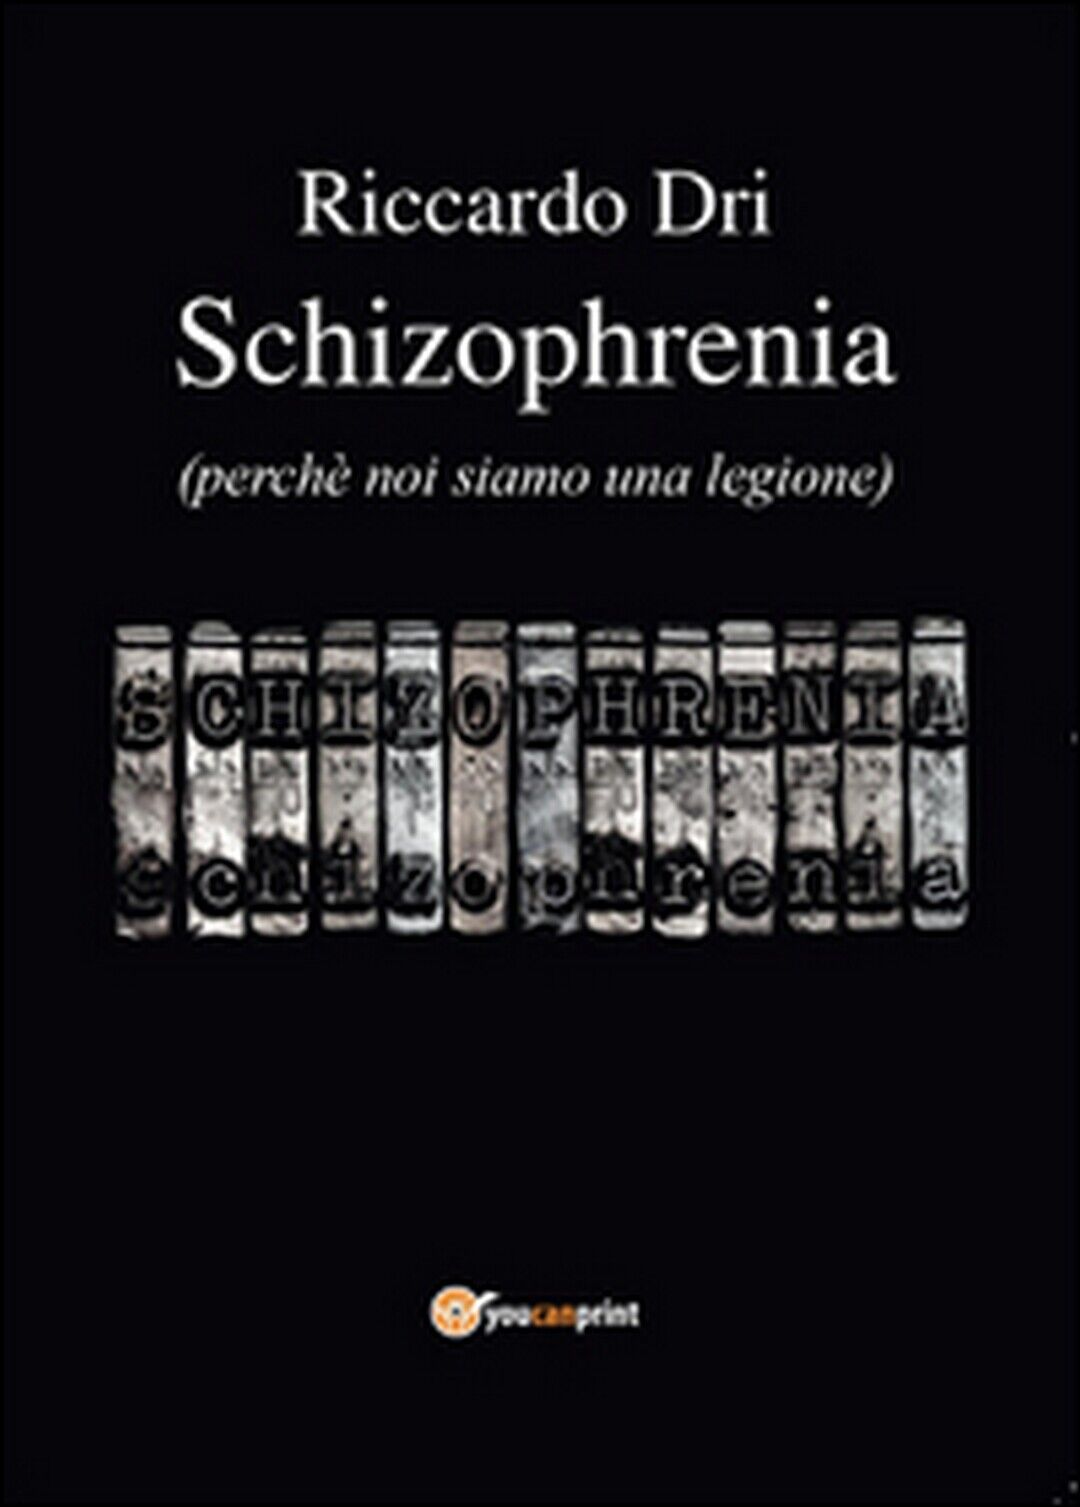 Schizophrenia di Riccardo Dri (Youcanprint 2016)